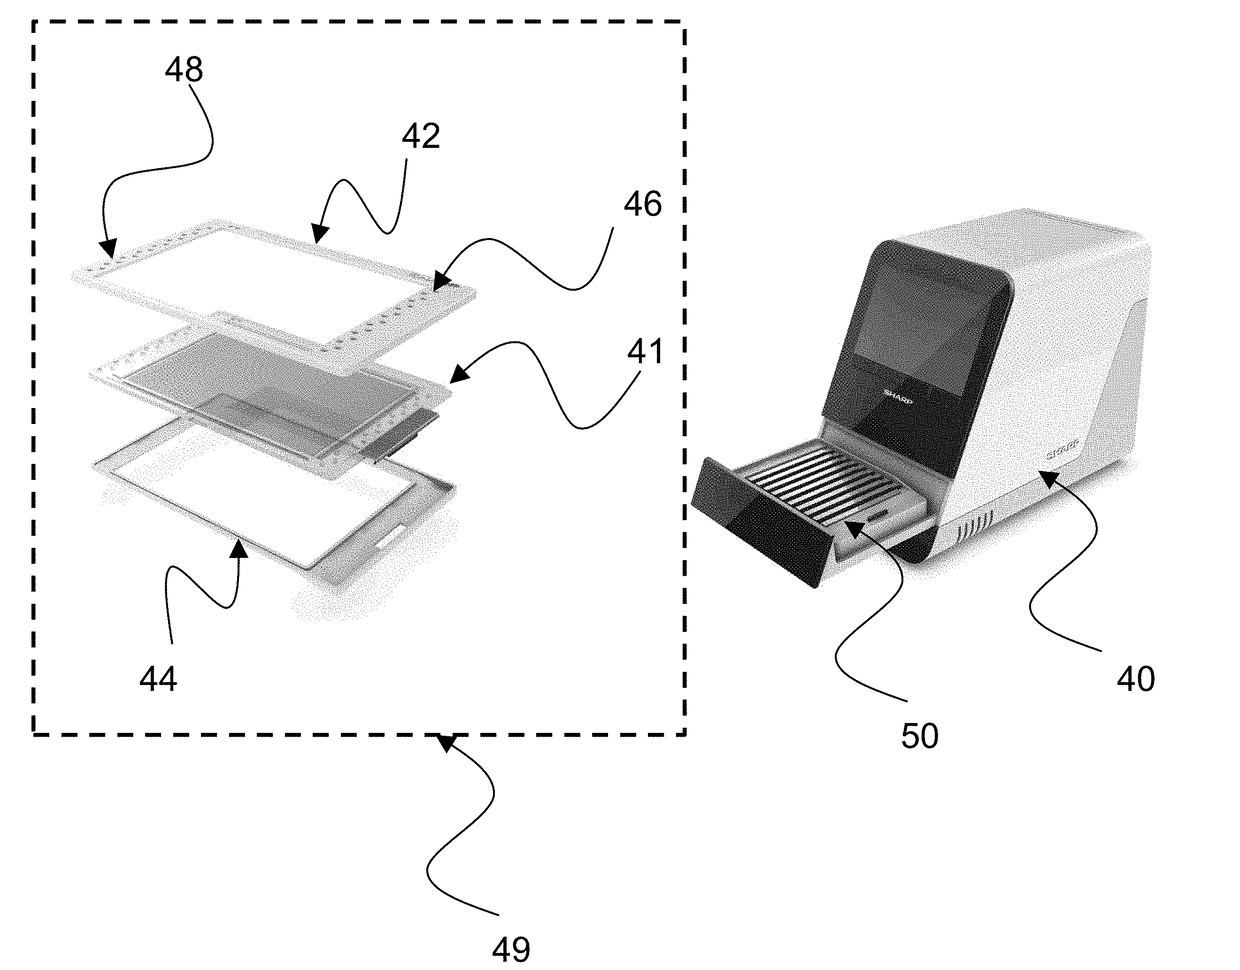 Microfluidic device with multiple temperature zones